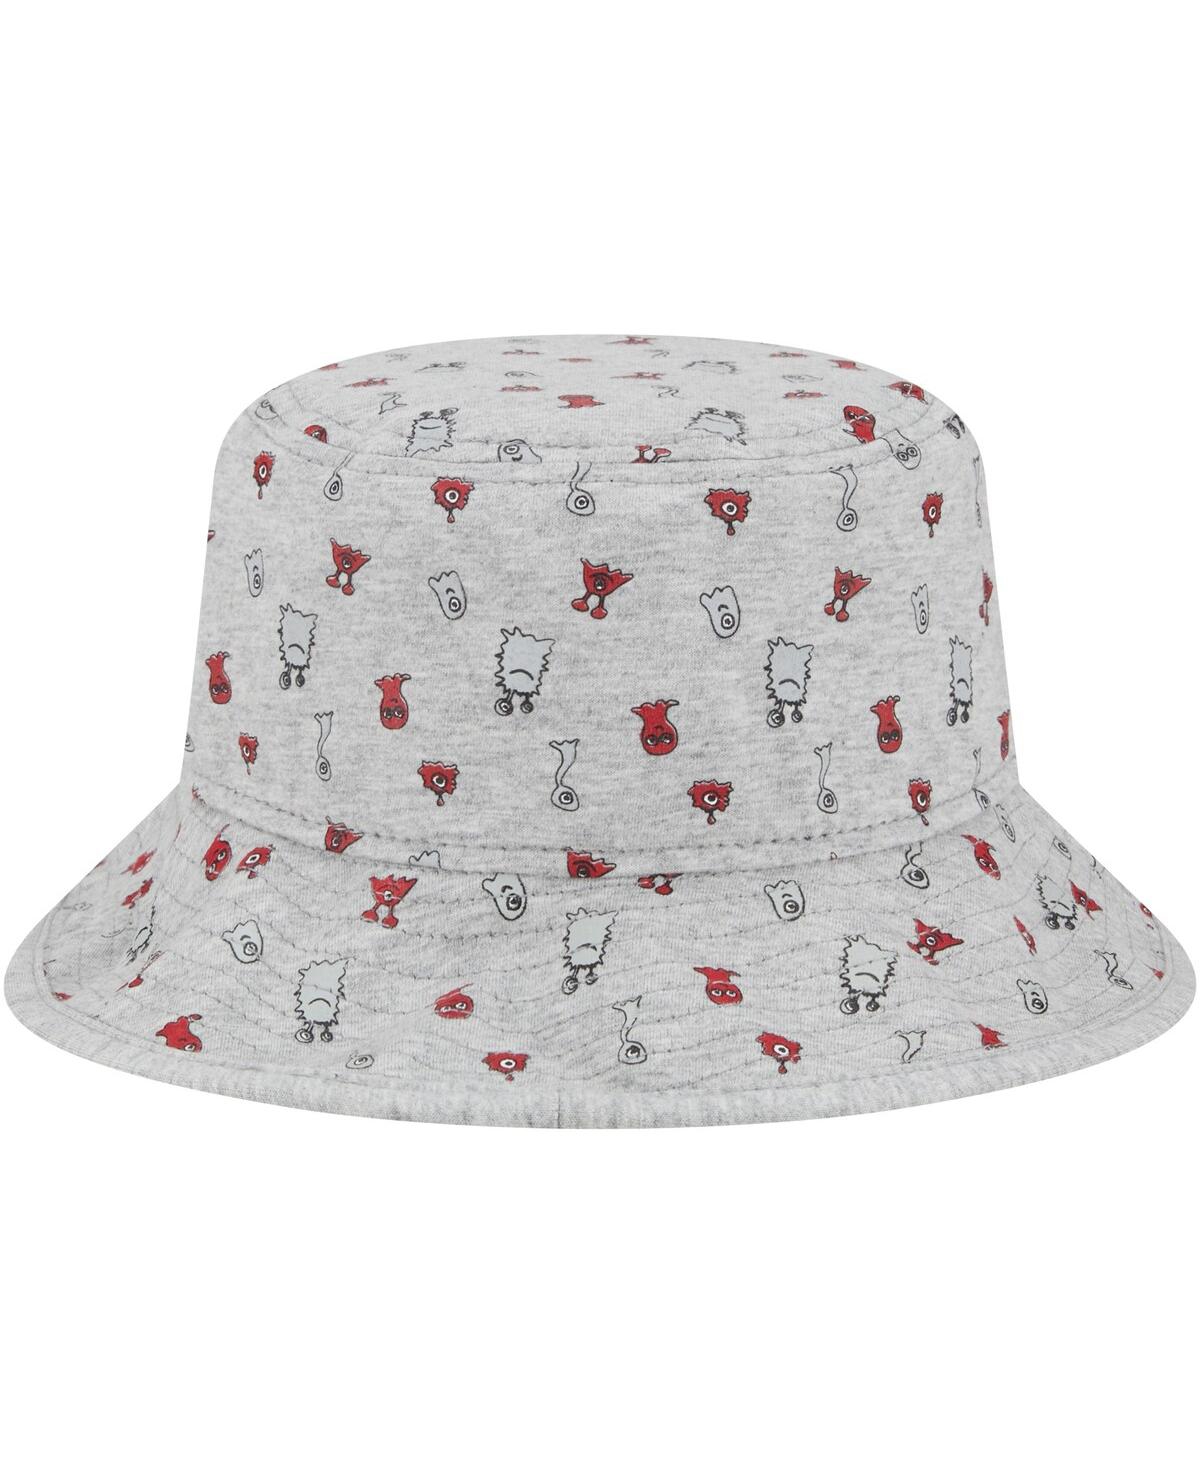 Shop New Era Toddler Boys And Girls  Heather Gray Alabama Crimson Tide Critter Bucket Hat